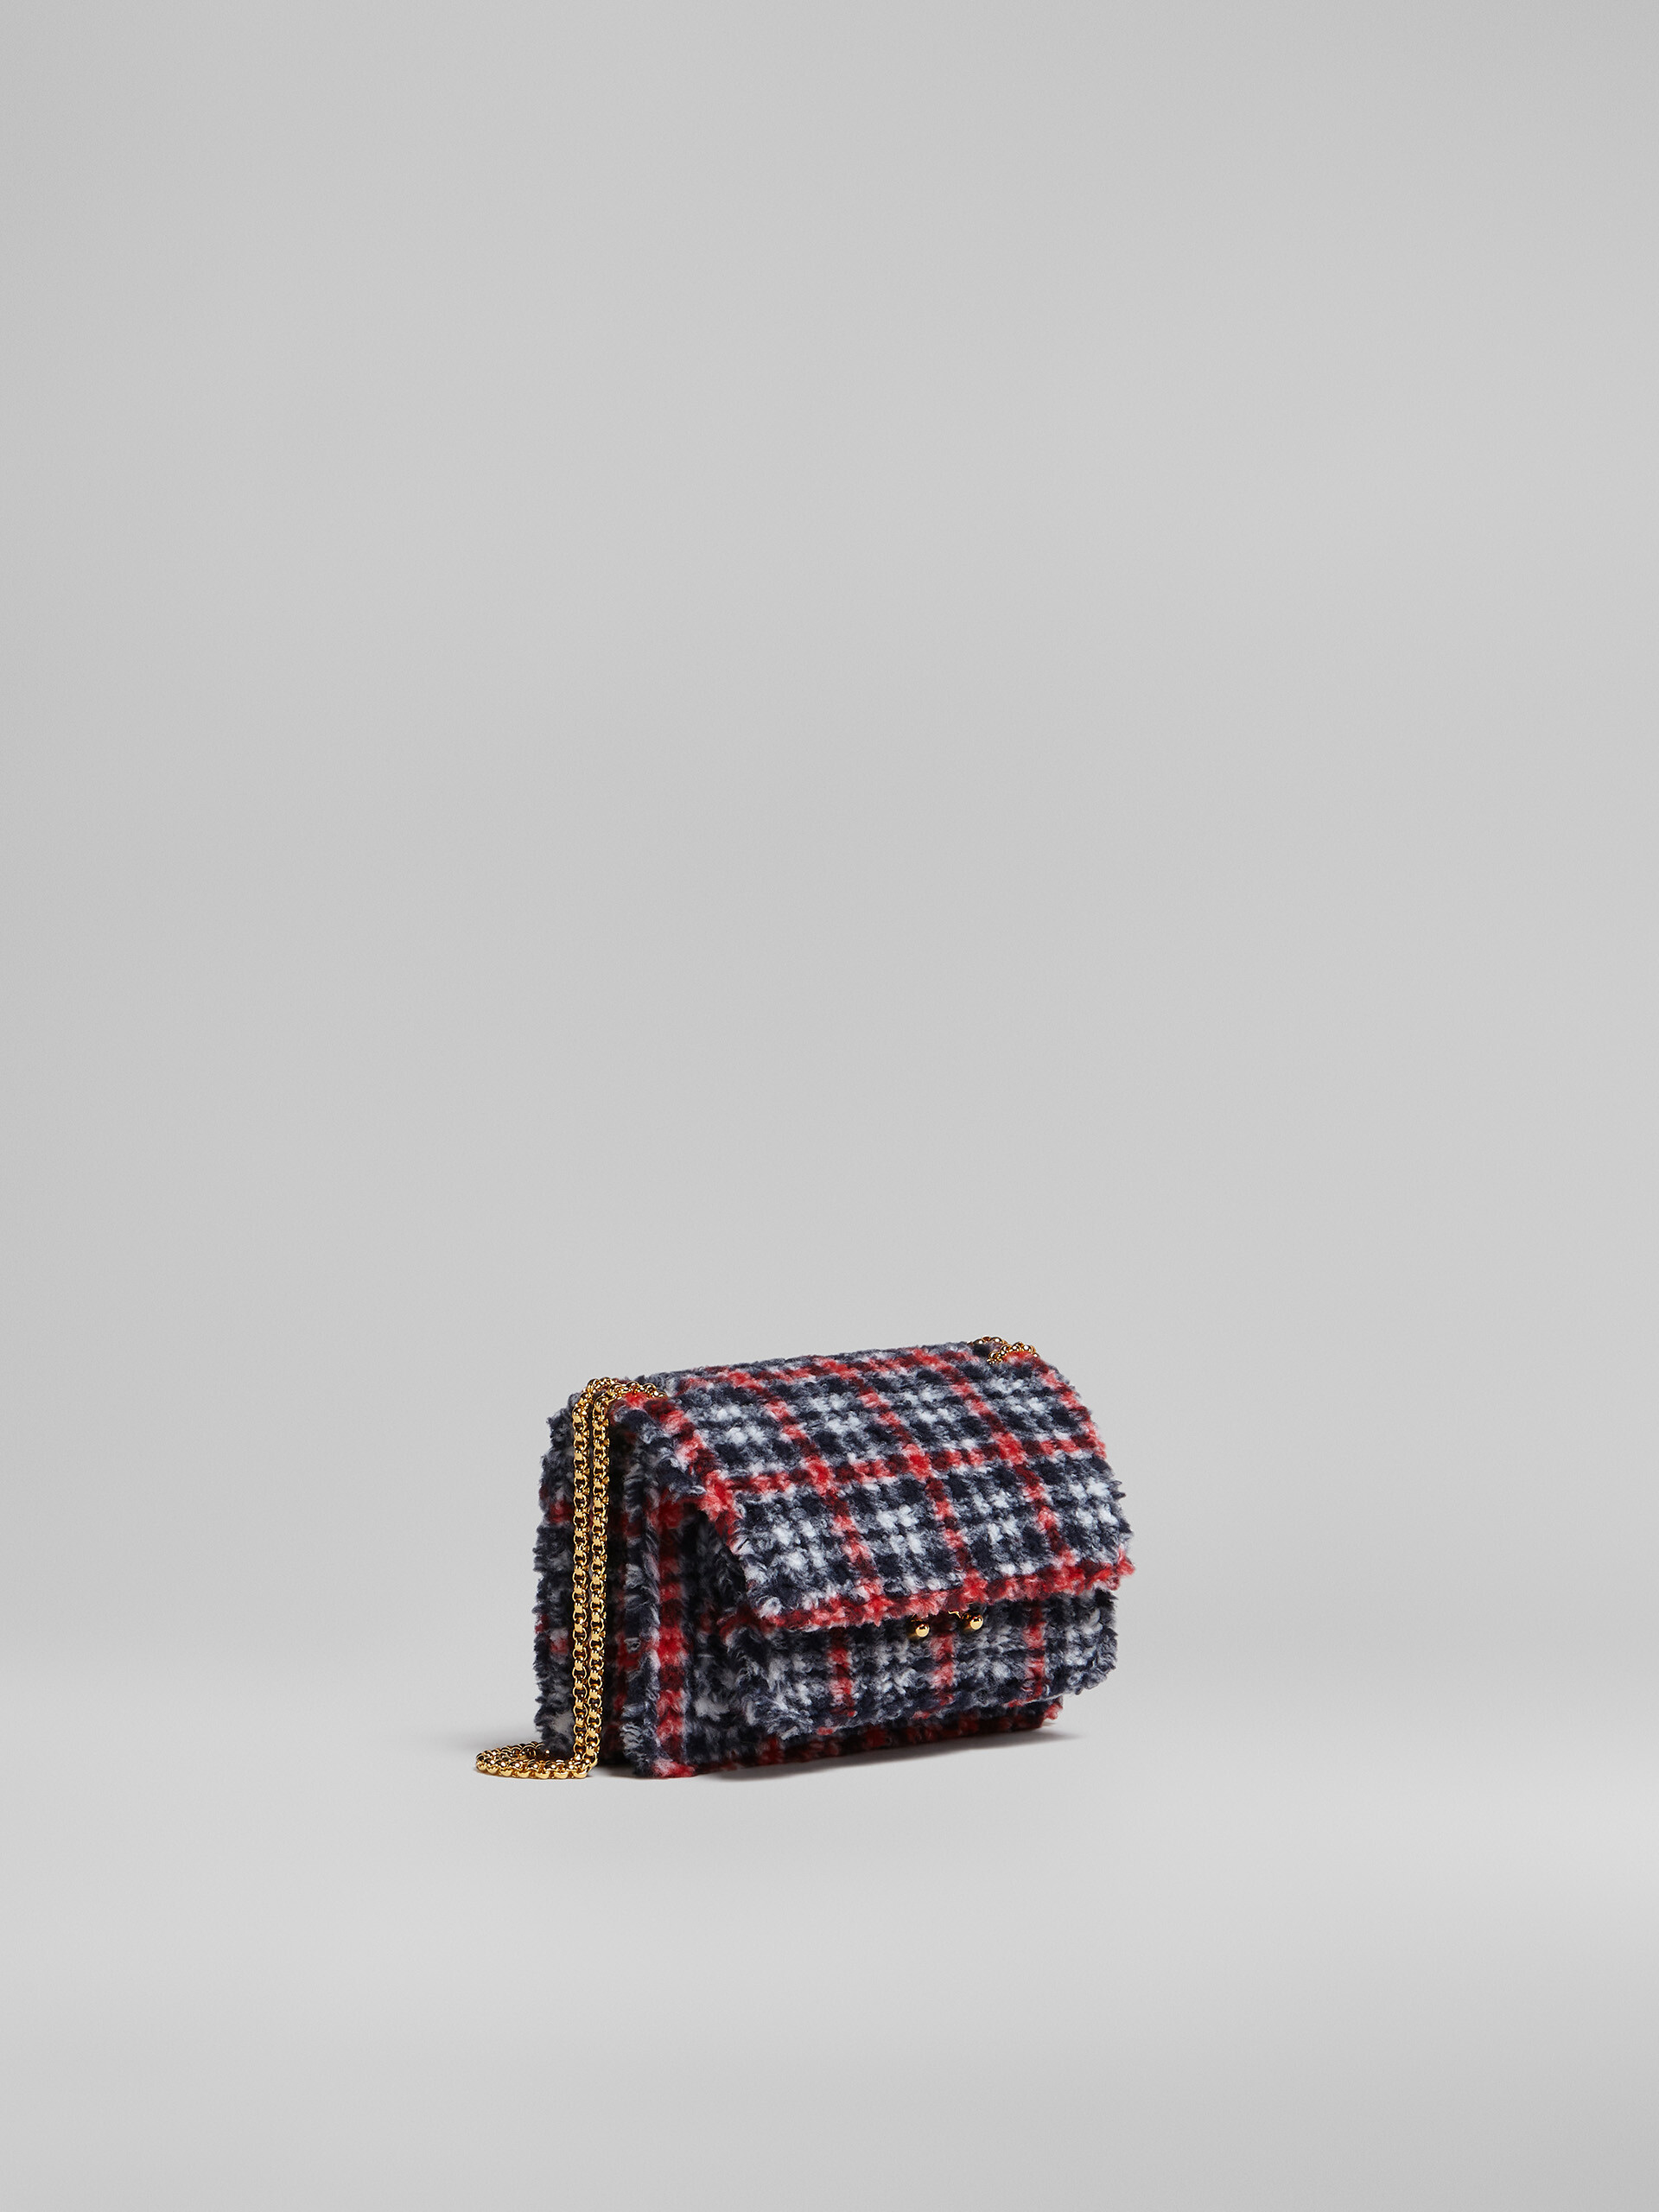 TRUNK SOFT medium bag in check fabric - Shoulder Bag - Image 6